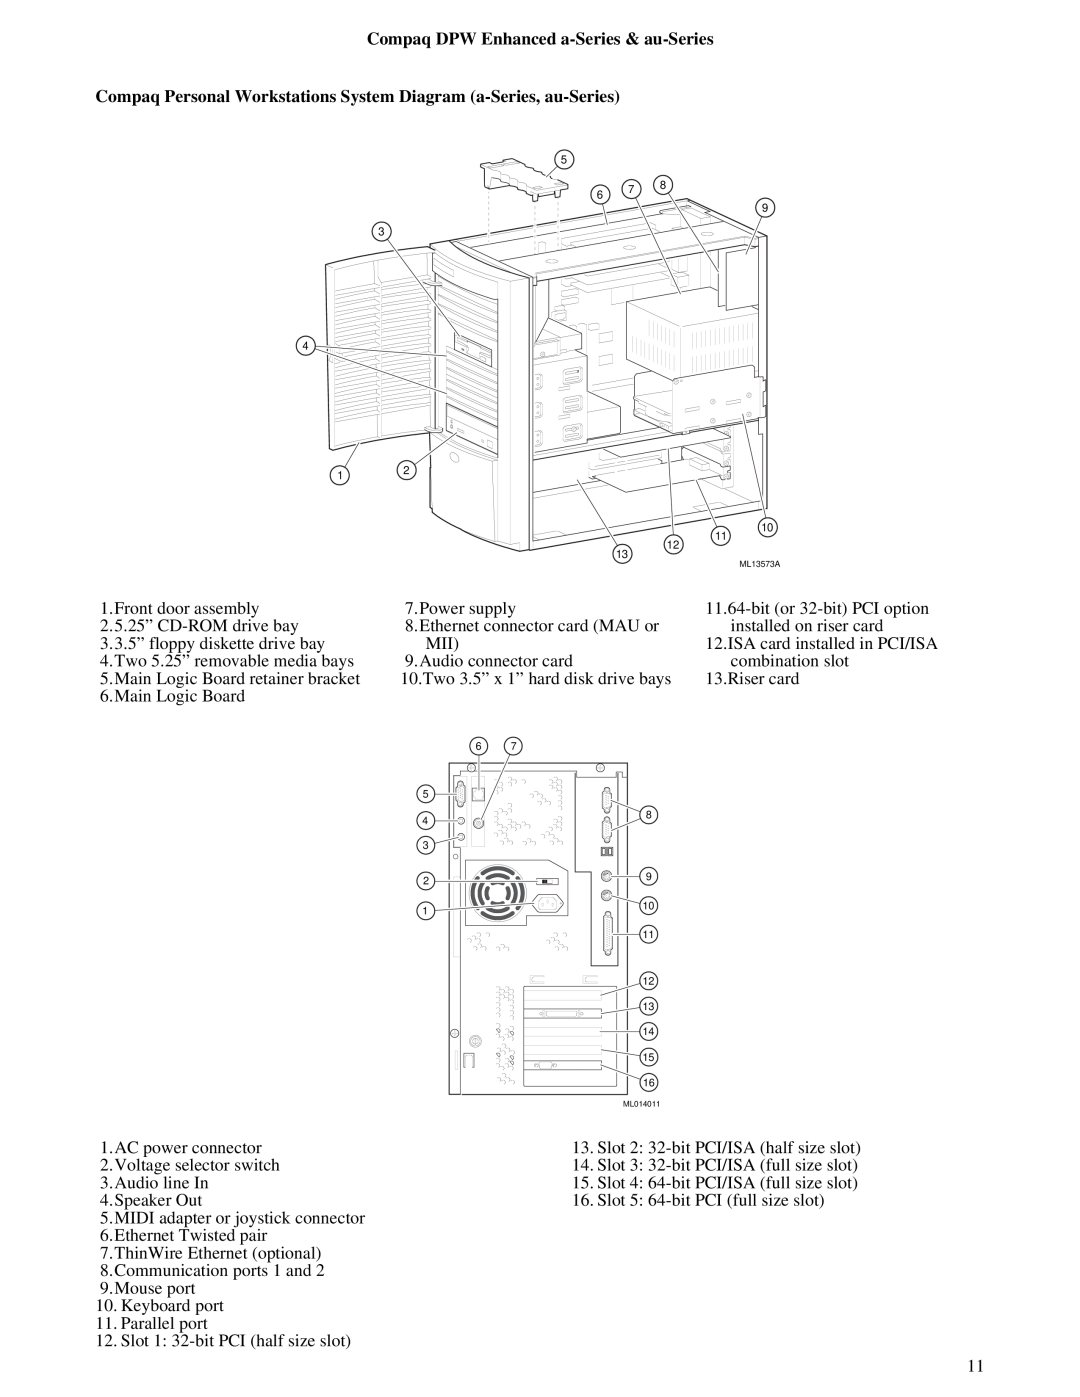 Compaq Compaq Personal Workstations System Diagram a-Series, au-Series, Compaq DPW Enhanced a-Series & au-Series 